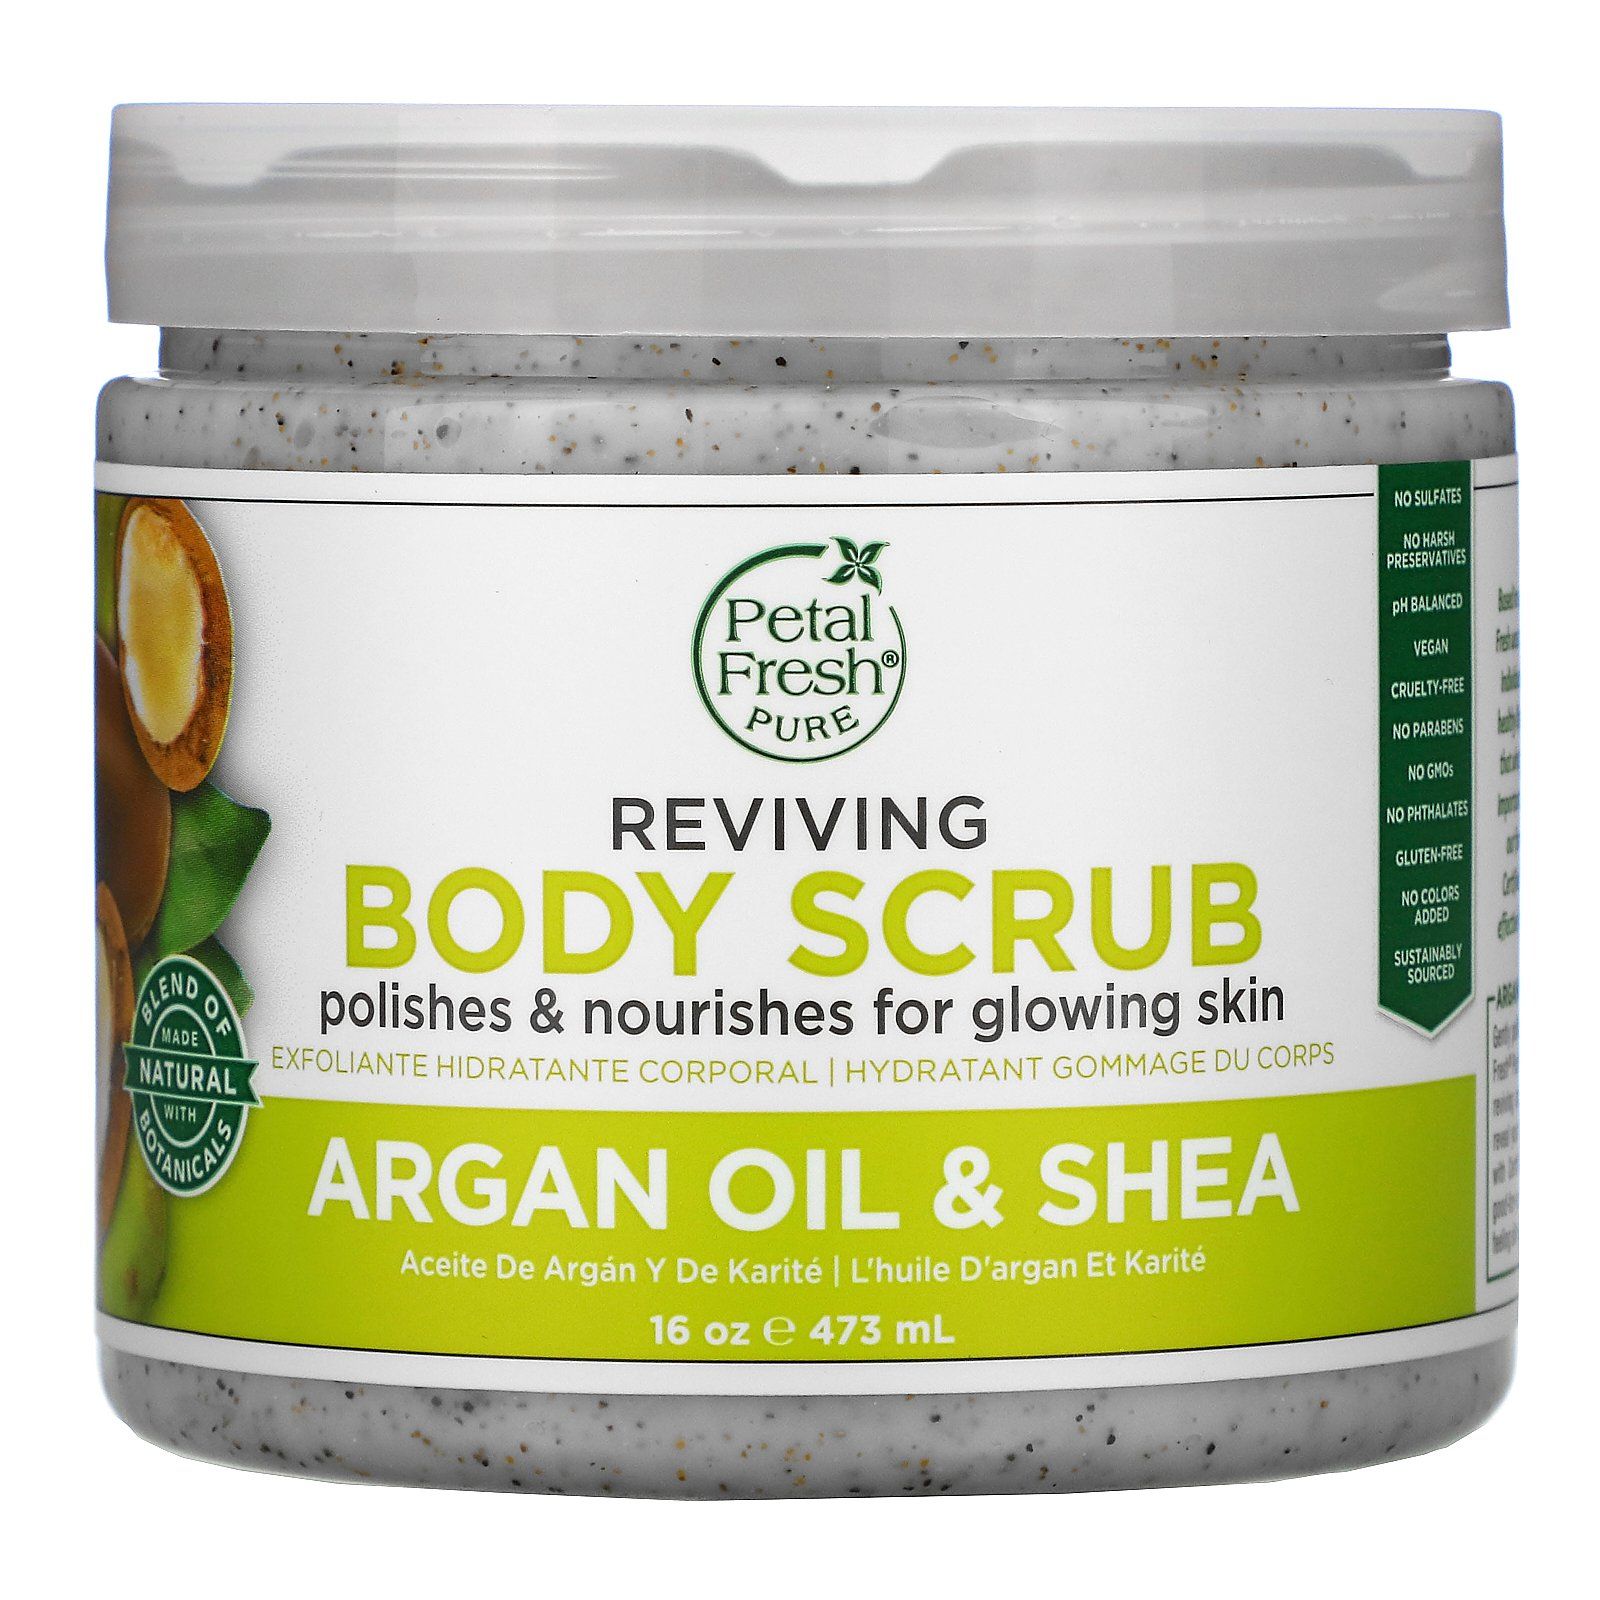 Petal Fresh Pure - Argan Oil & Shea Body Scrub 16Oz - 473ml